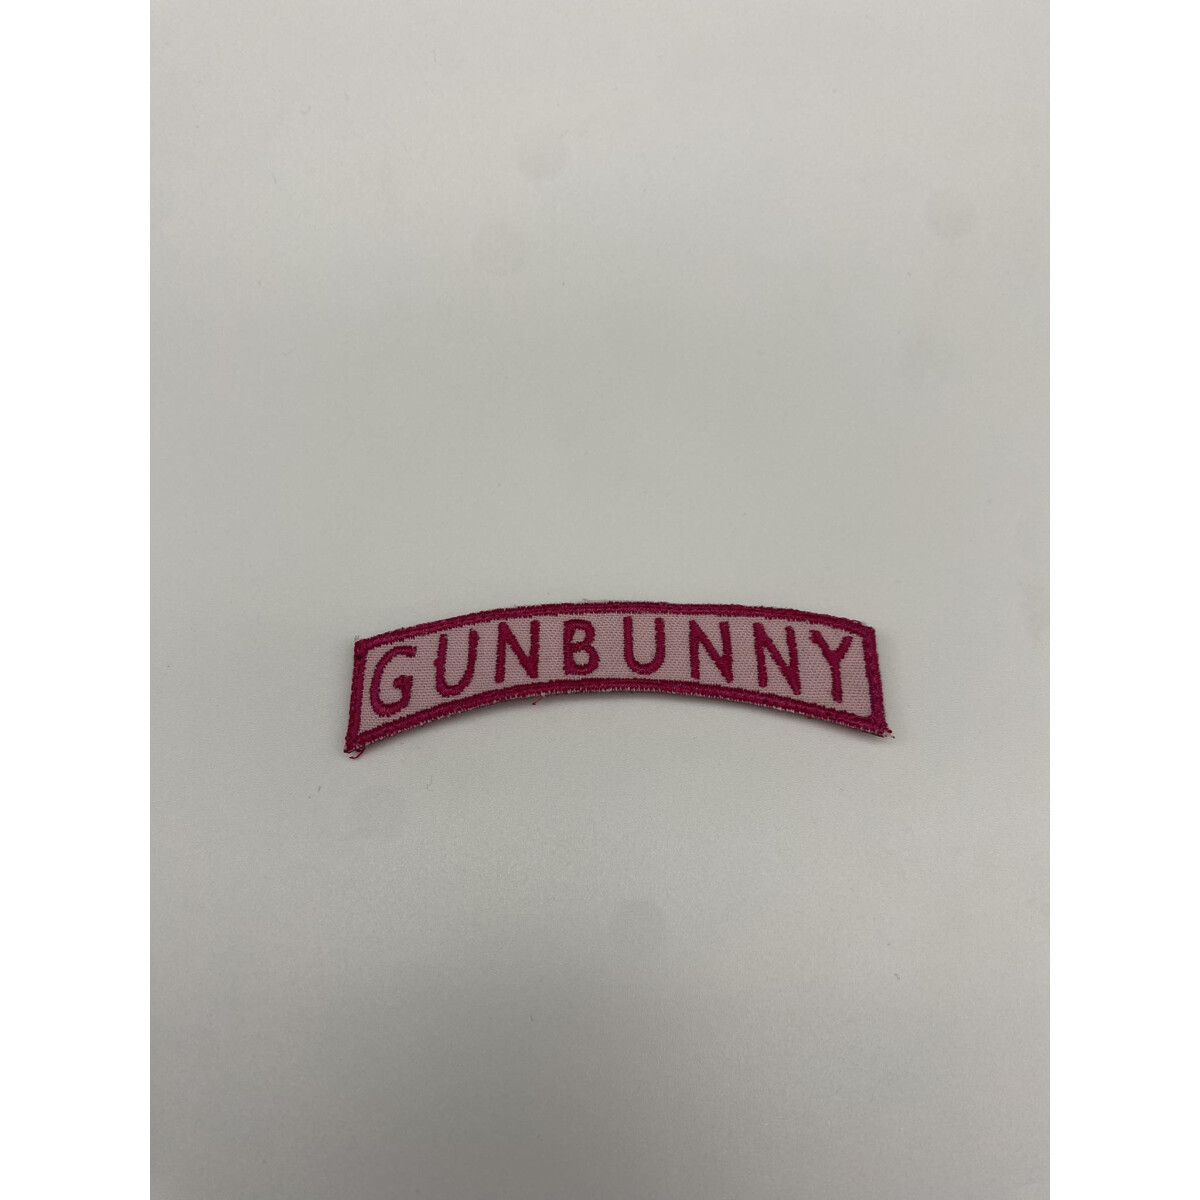 Gun Bunny Patch